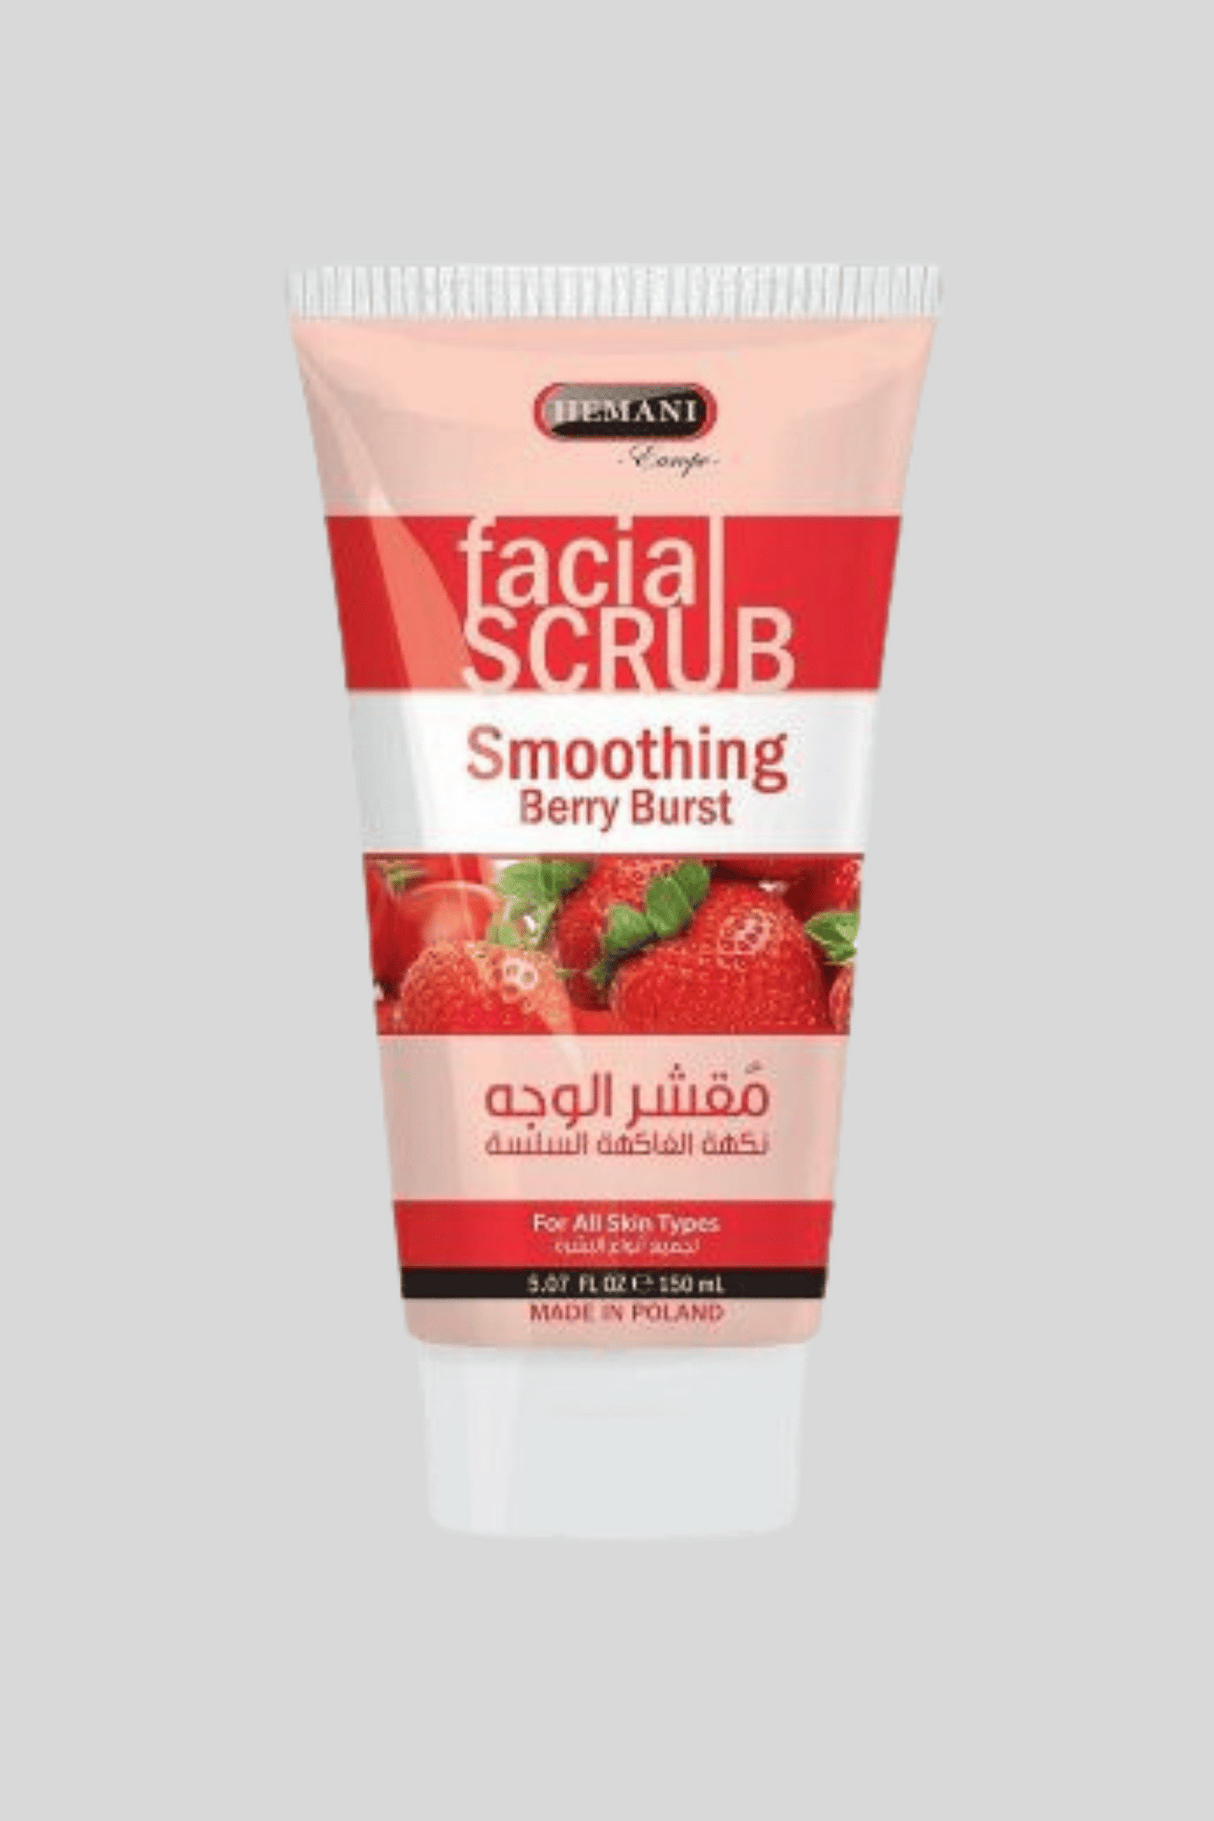 hemani facial scrub smoothing berry brust 150ml